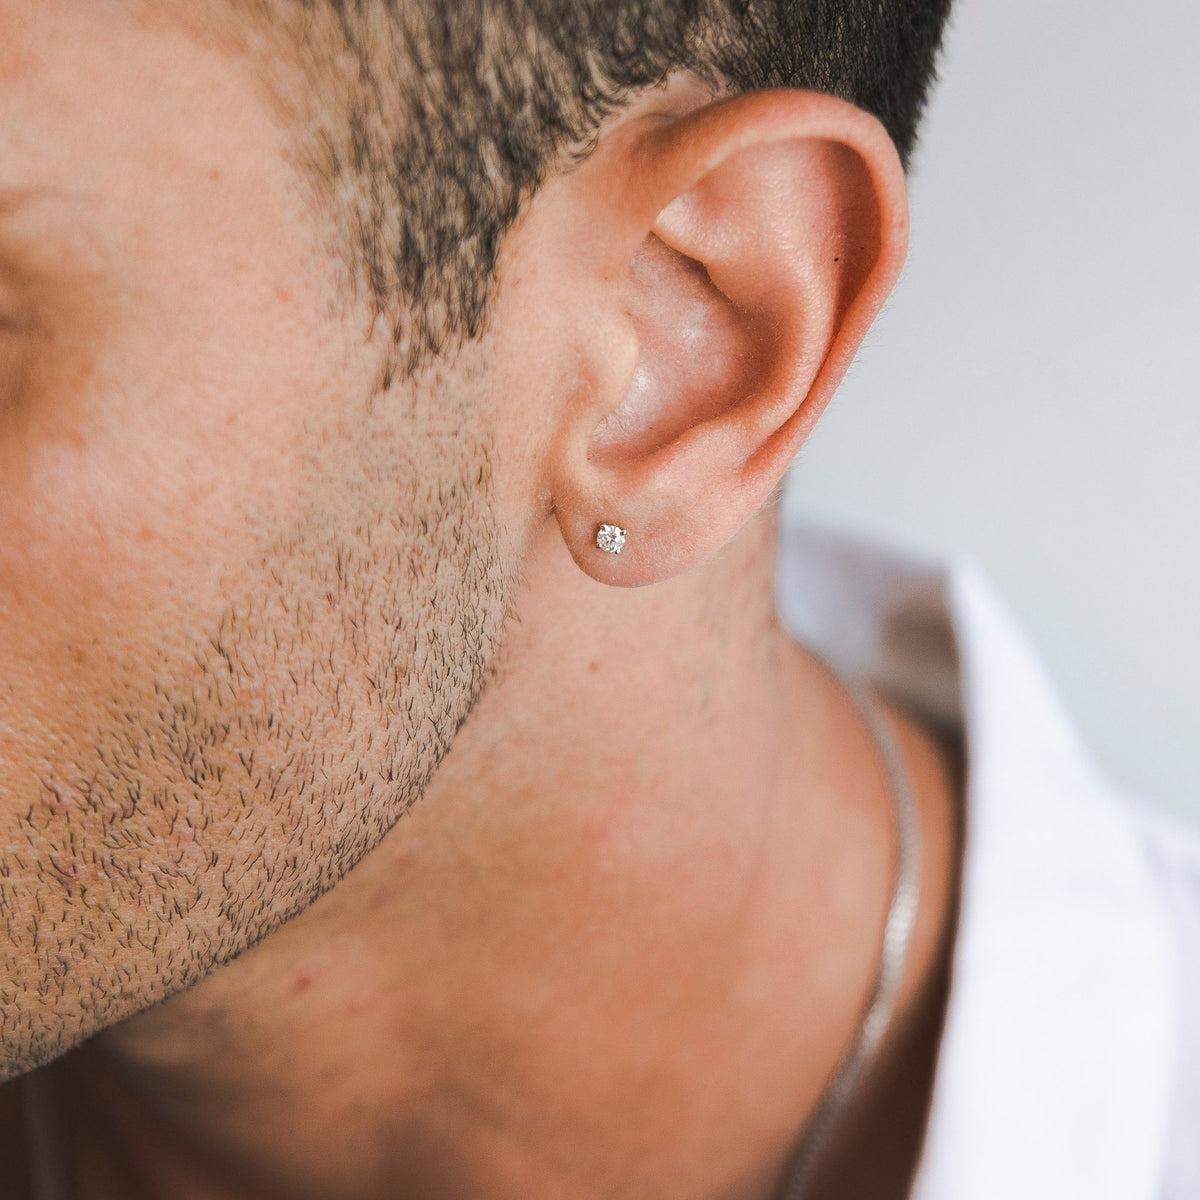 Men's 14K White Gold 0.1 Carat Diamond Stud Earring for Him by Shlomit Rogel.

0.10 carat diamond stud earring, with a 